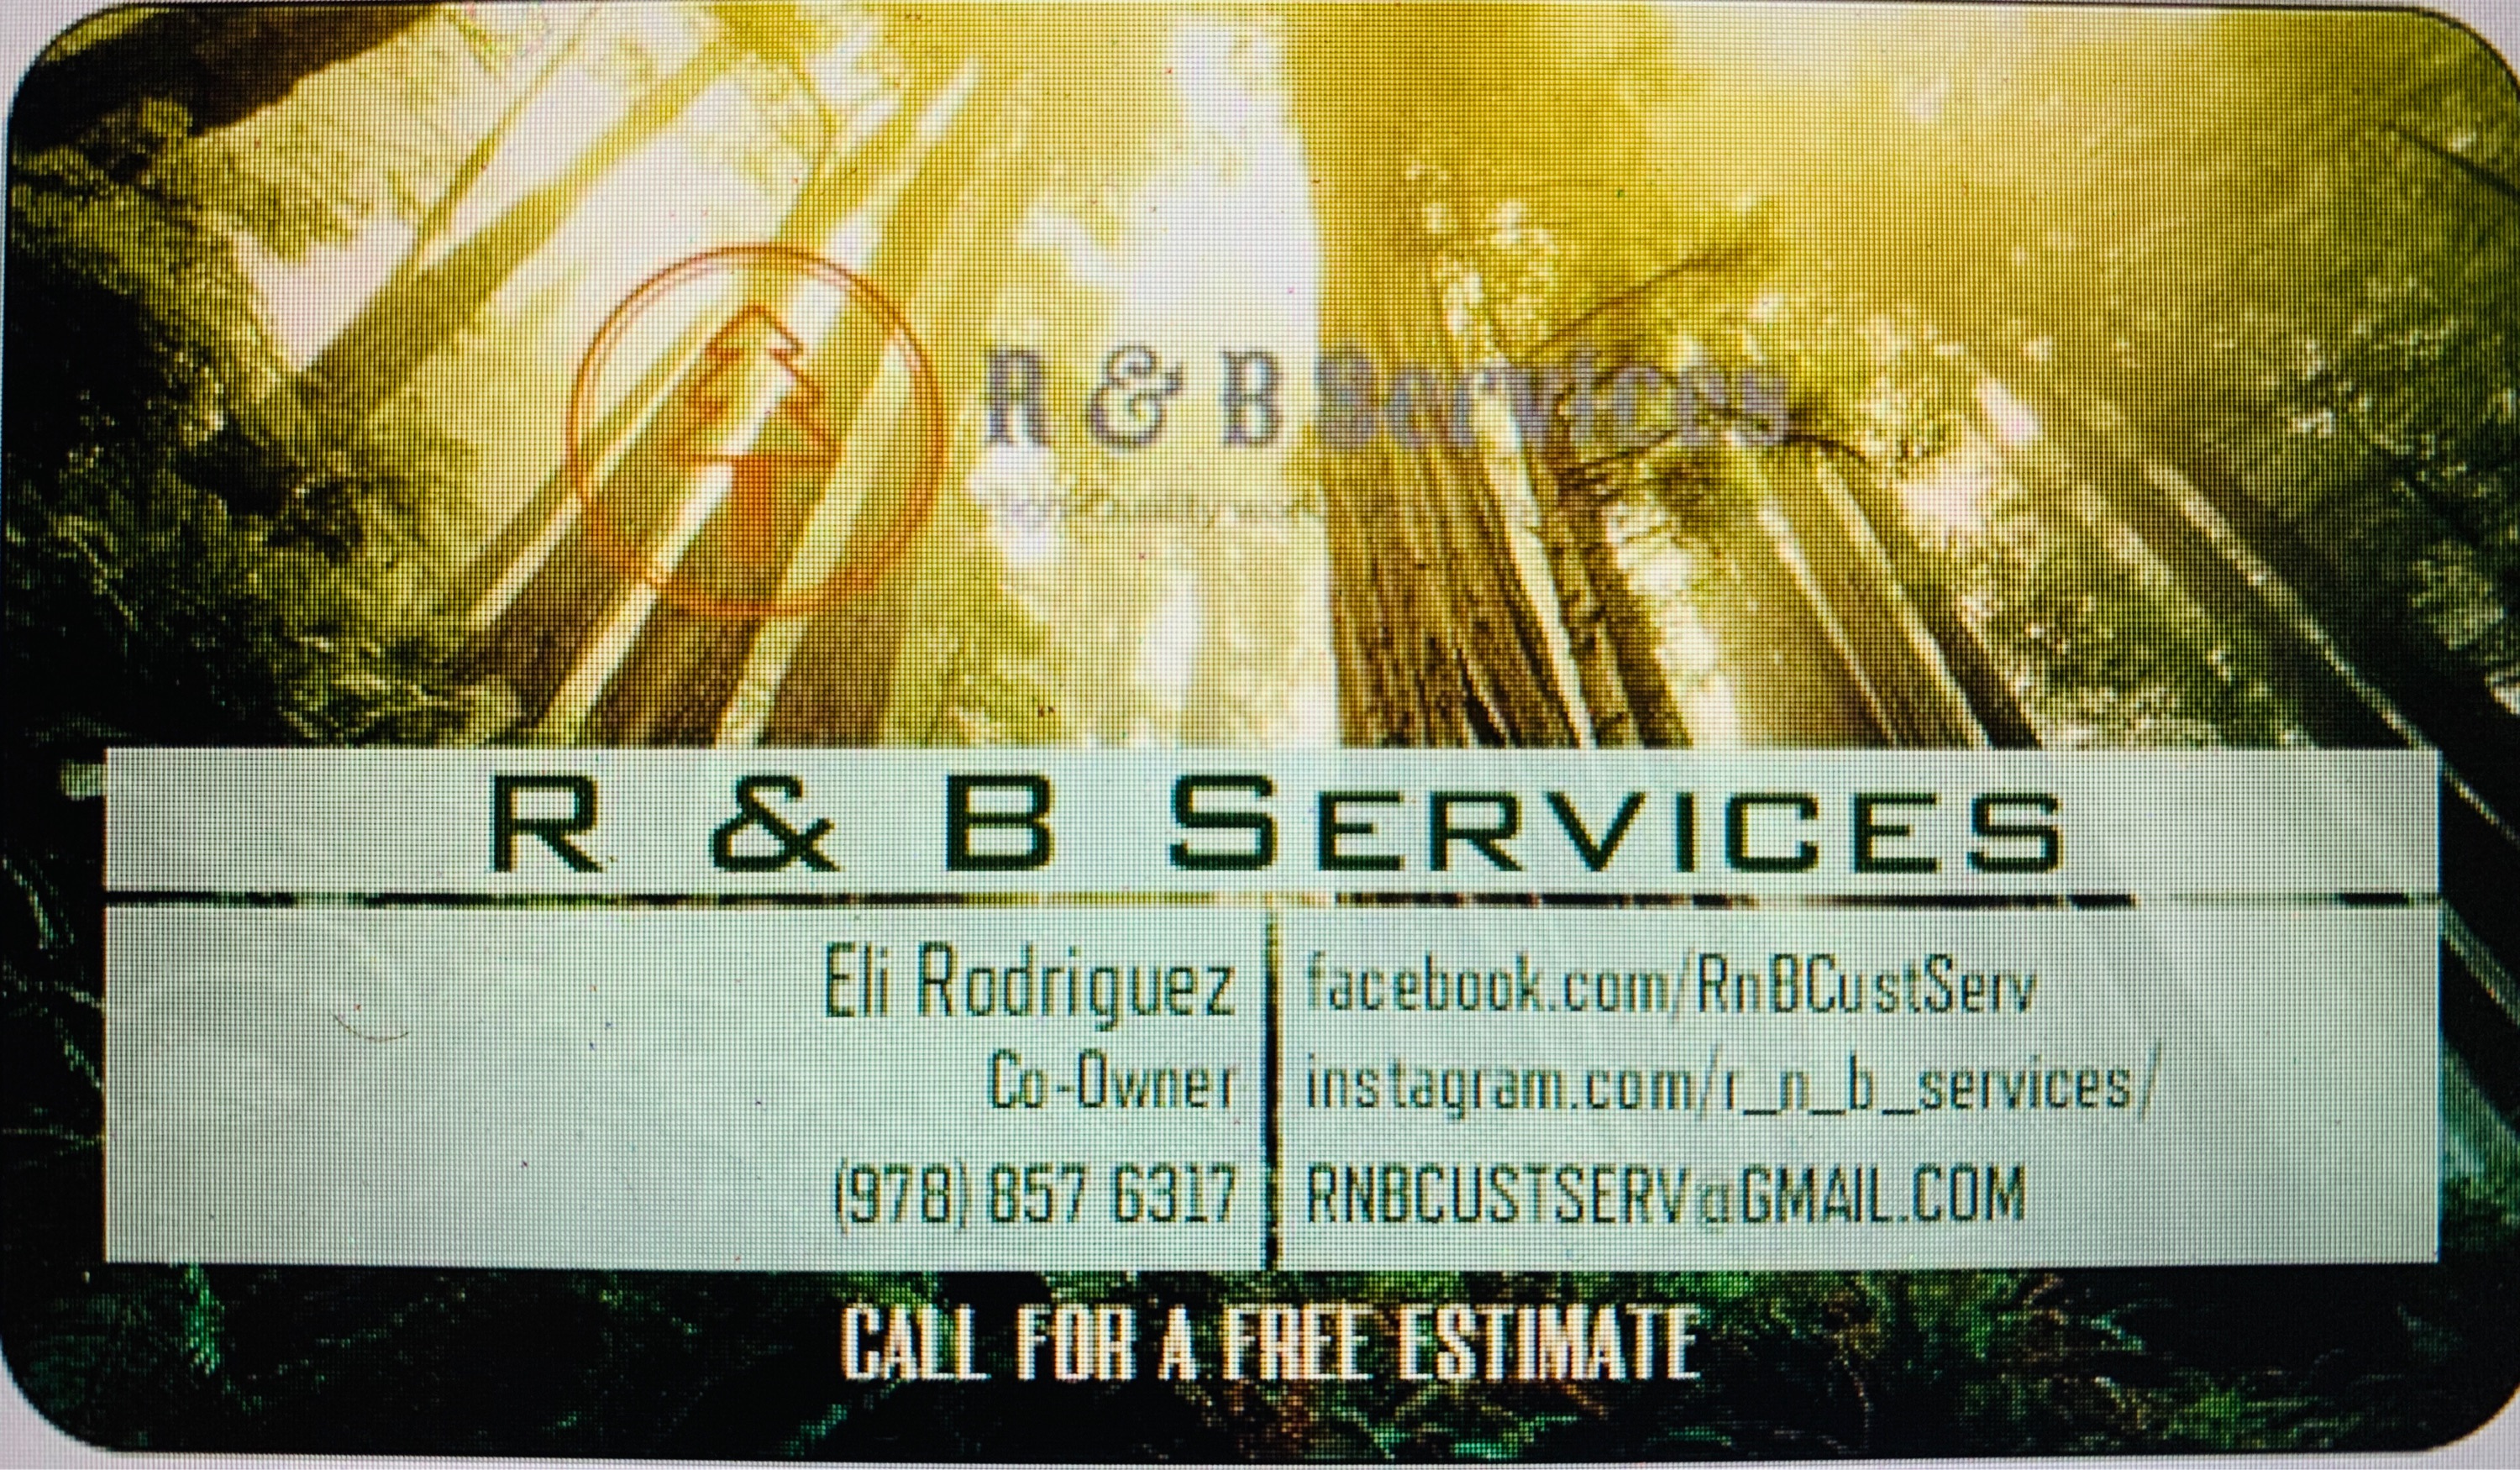 R & B Services Logo